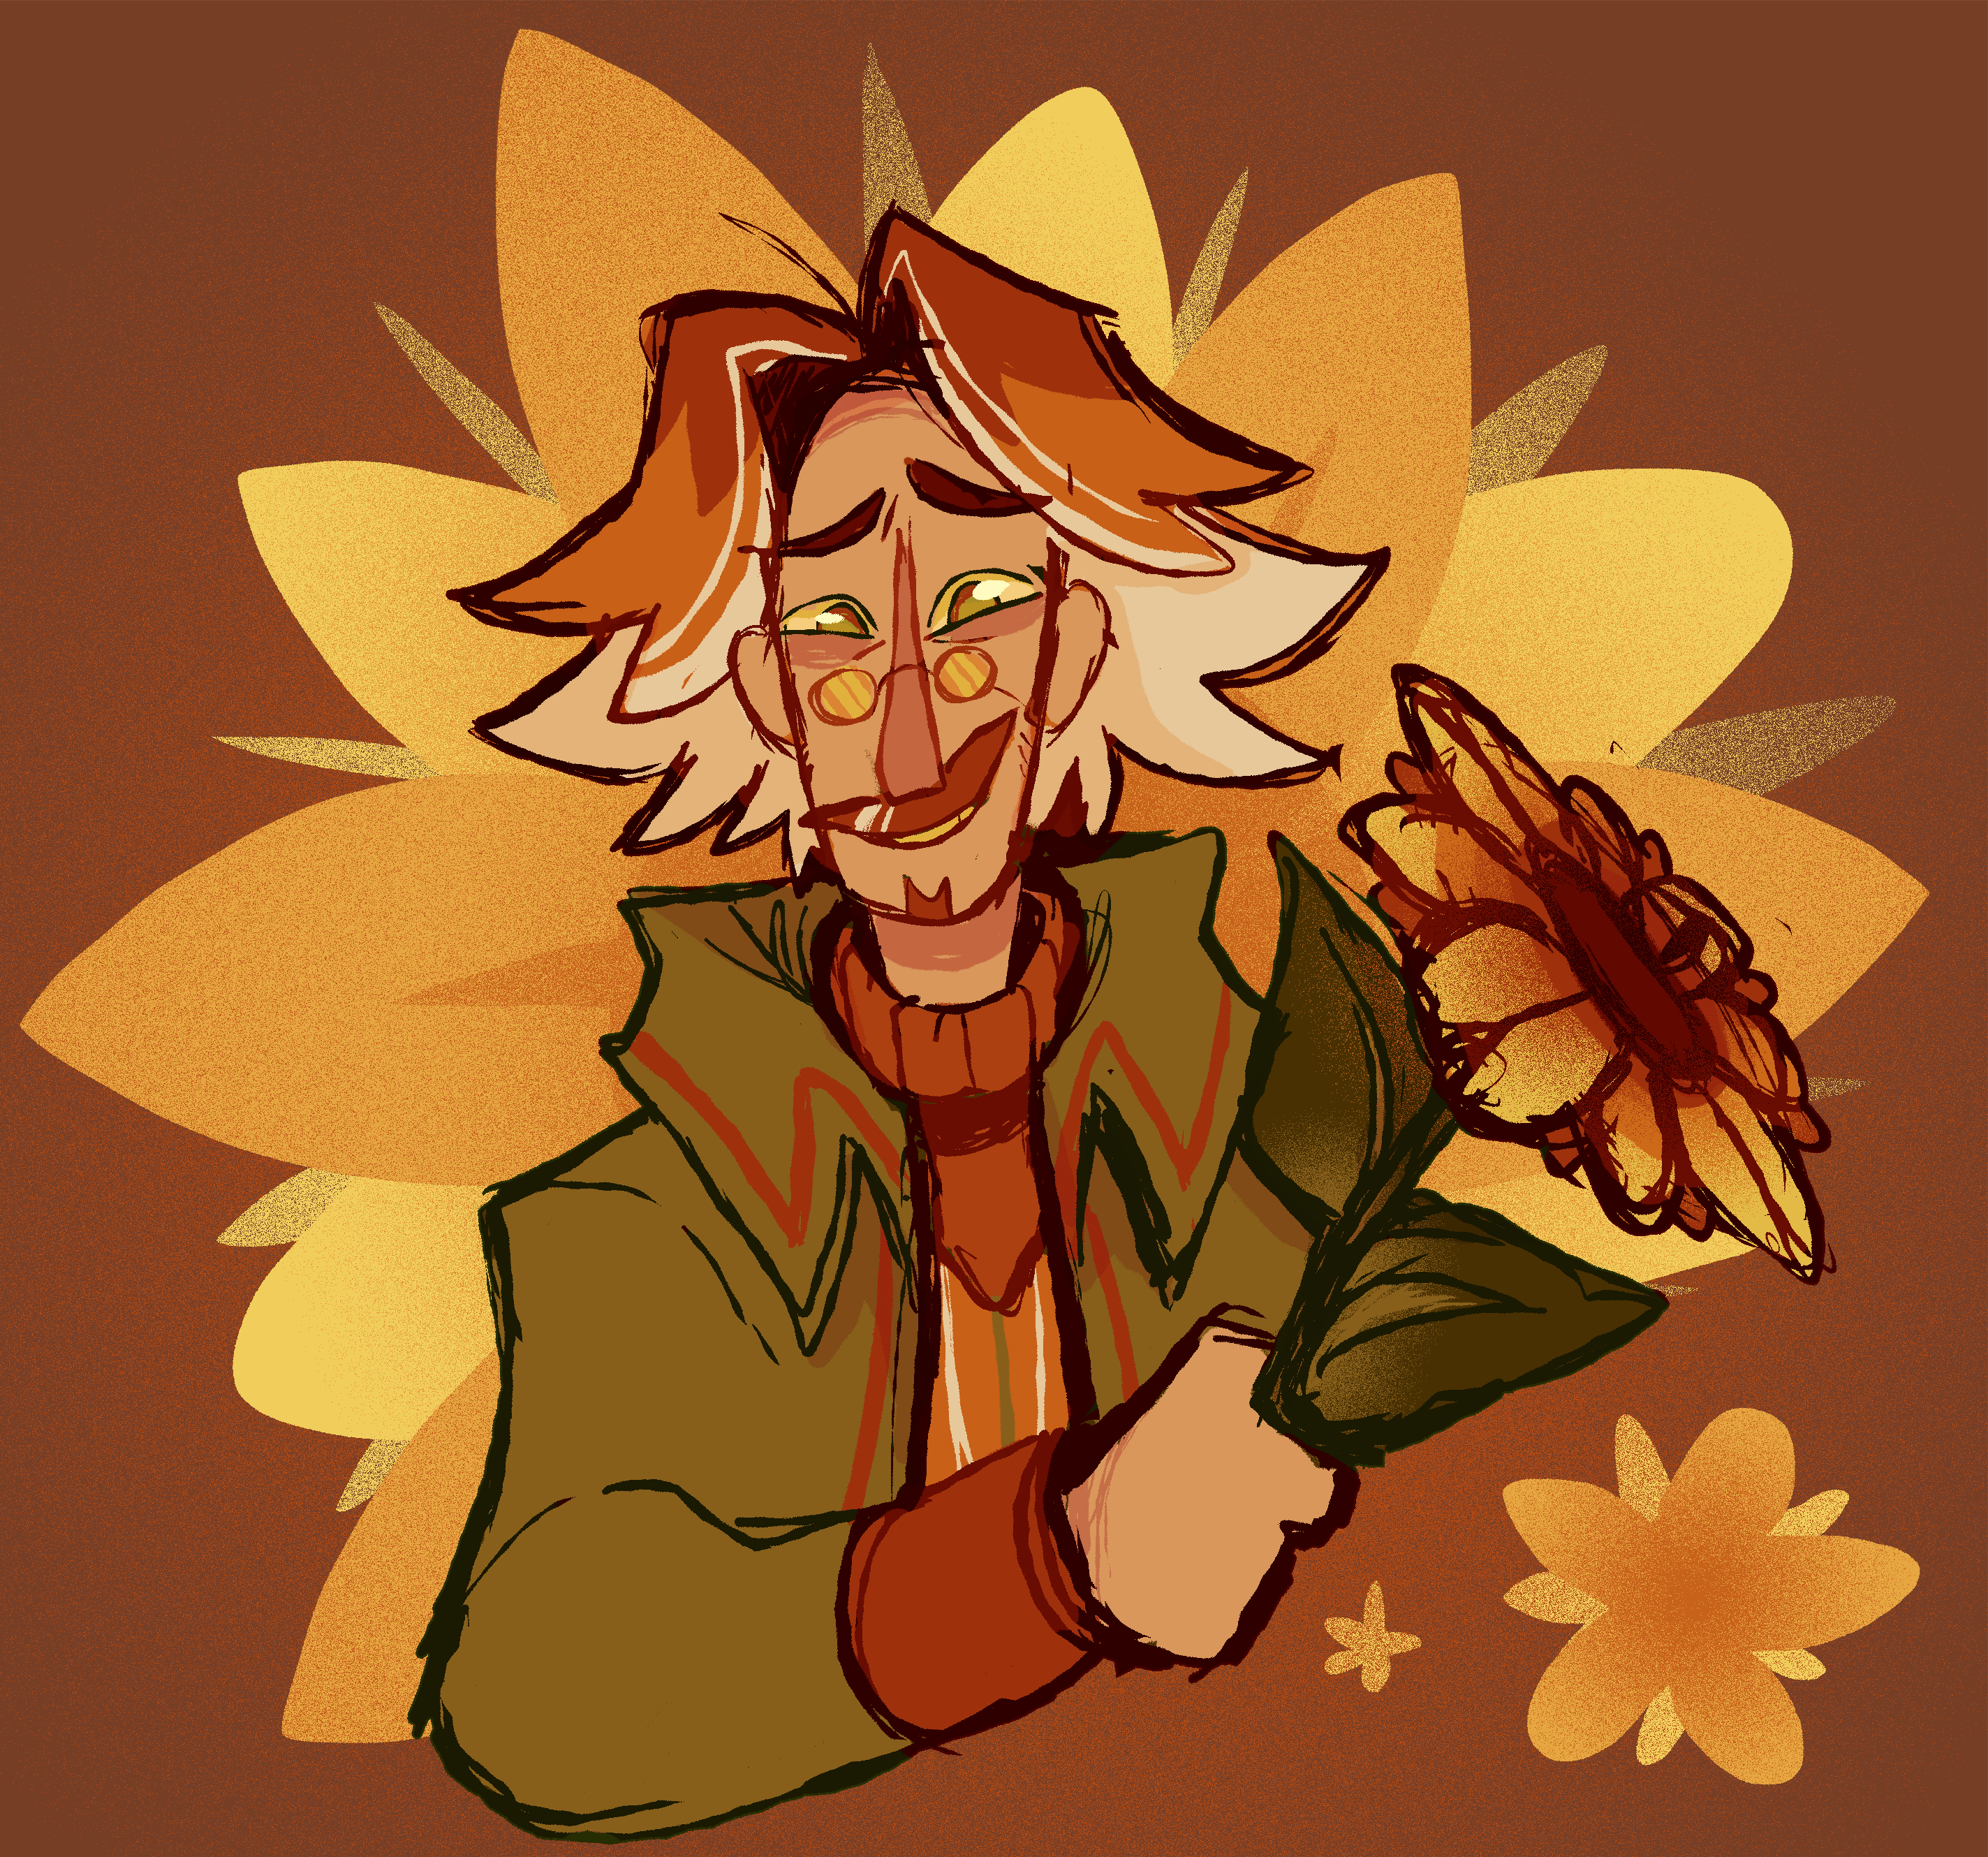 Dr. Sunshine bust holding a sunflower